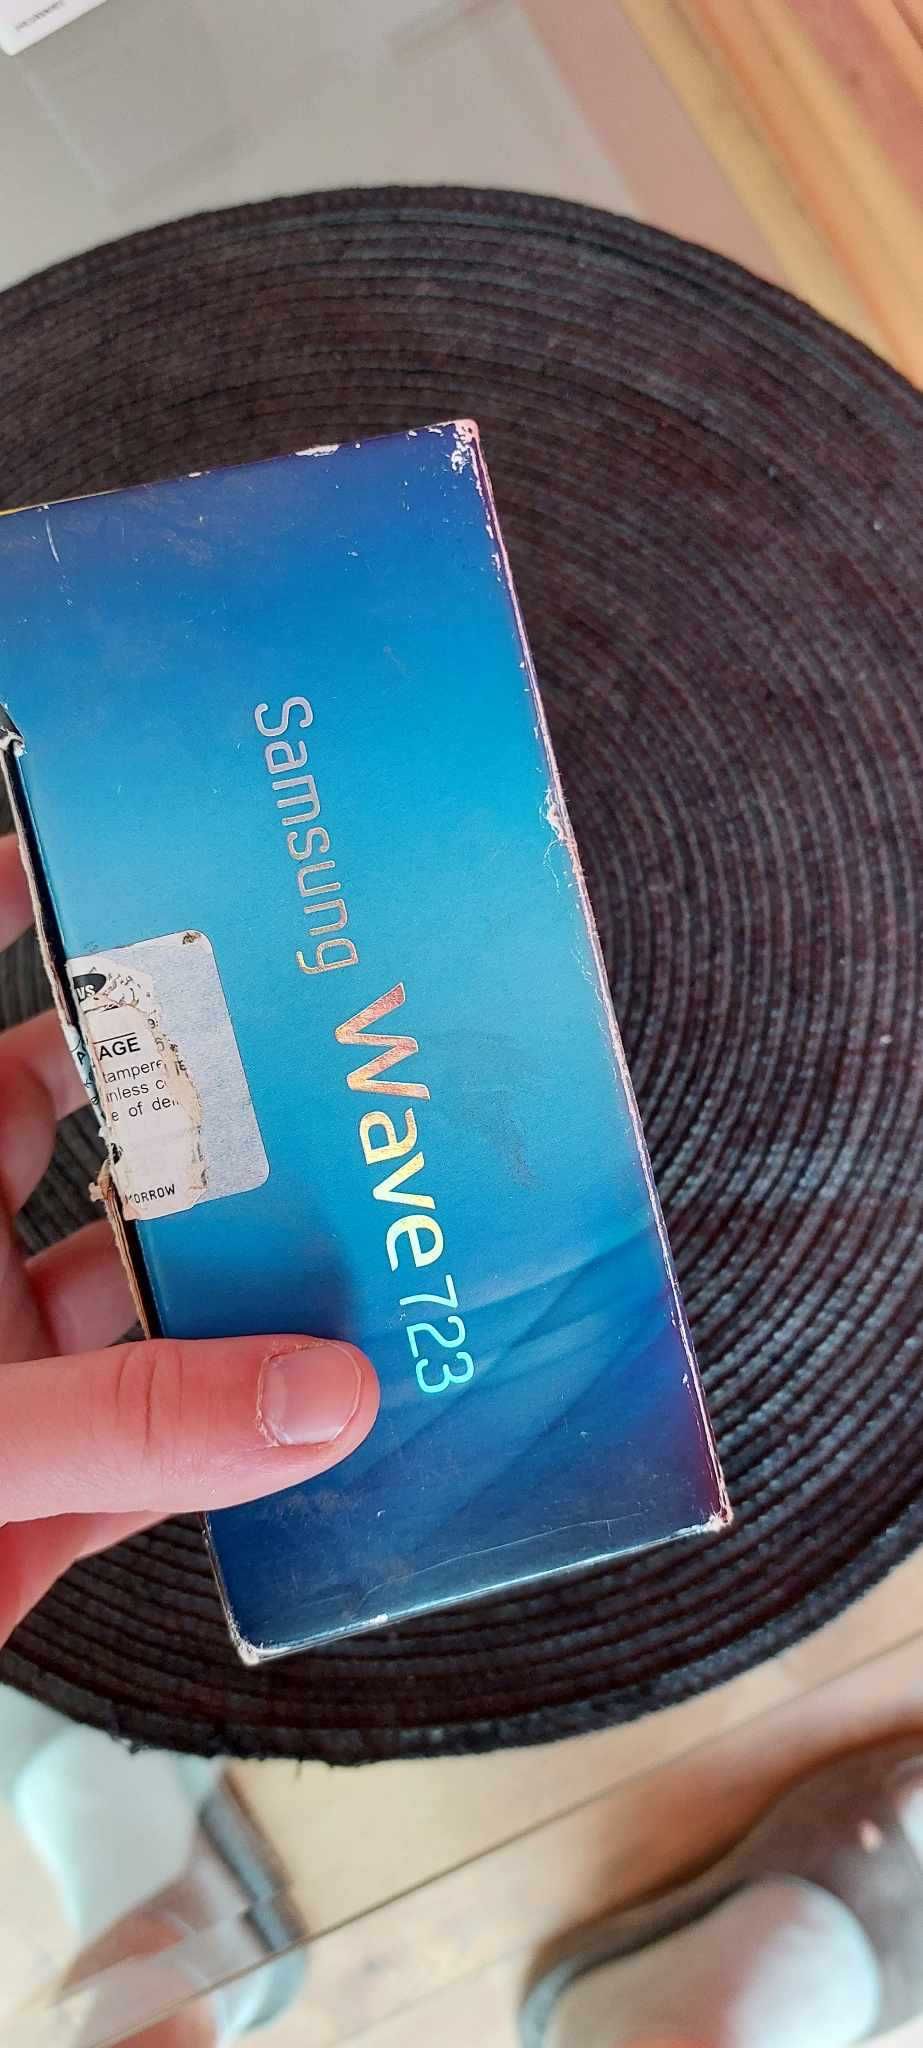 Samsung Wave 723 pudełko i klapka